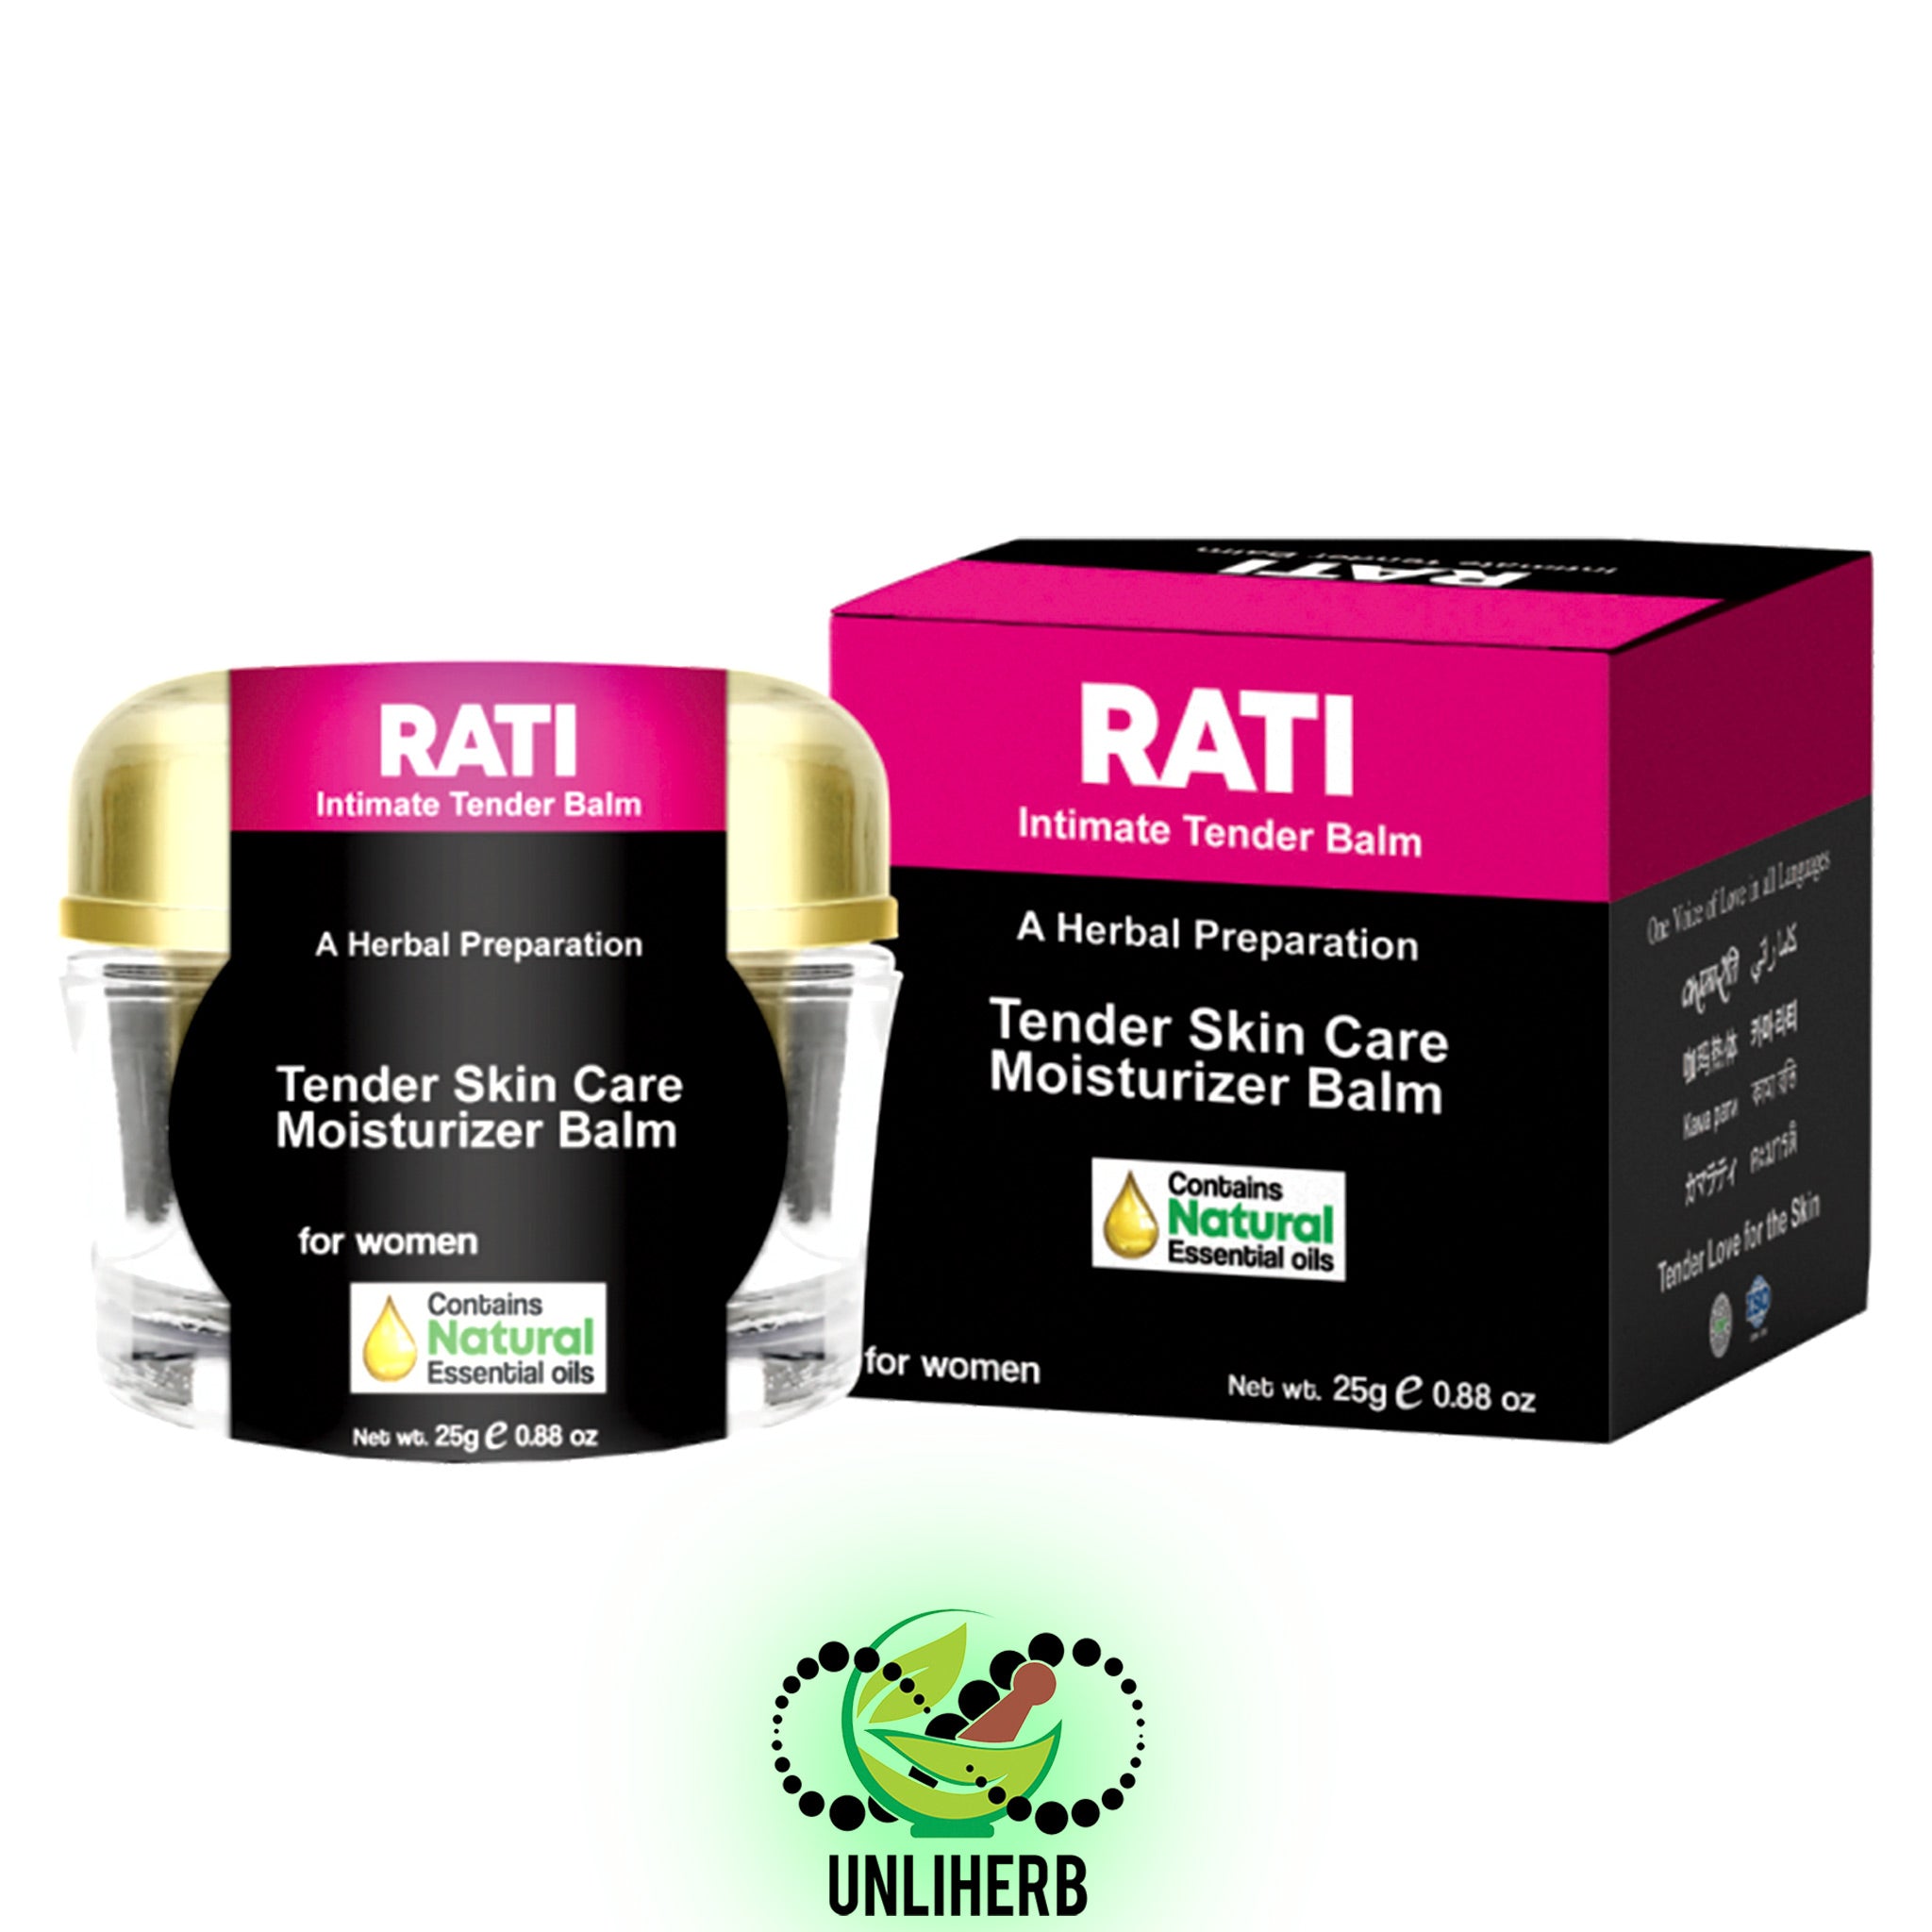 Rati Intimate Tender Balm Skin Care Moisturizer Balm for female 25g